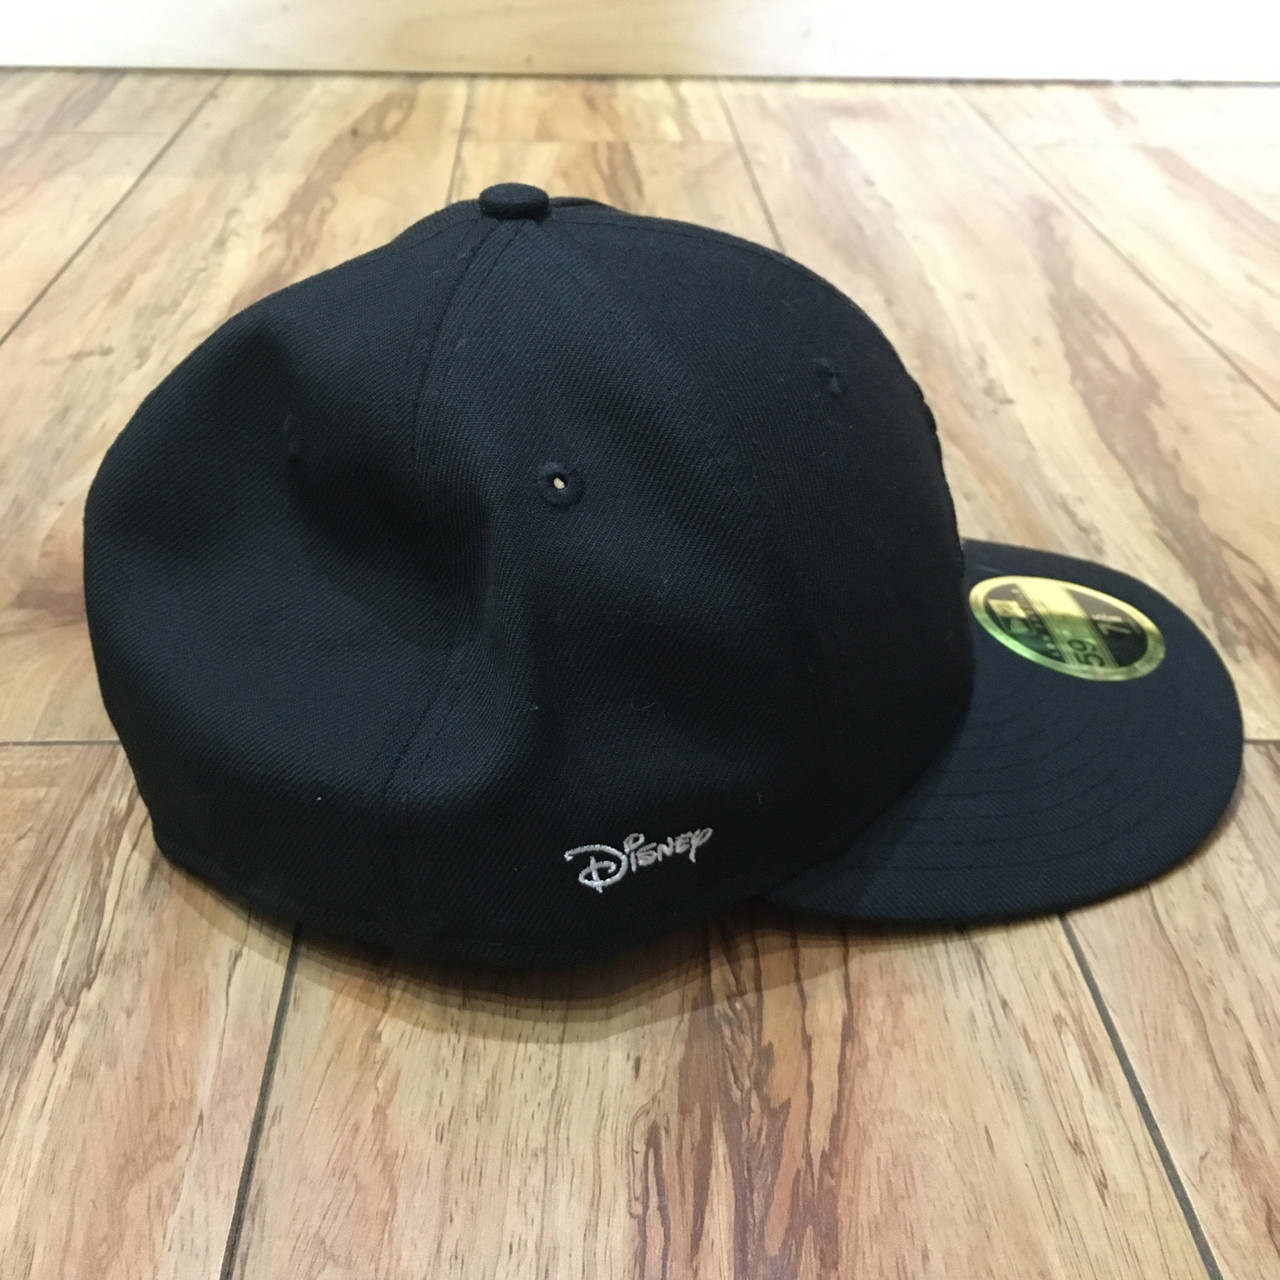 Kith x Disney Hat New Era Hat Black Sz 7 5/8 (#5807)